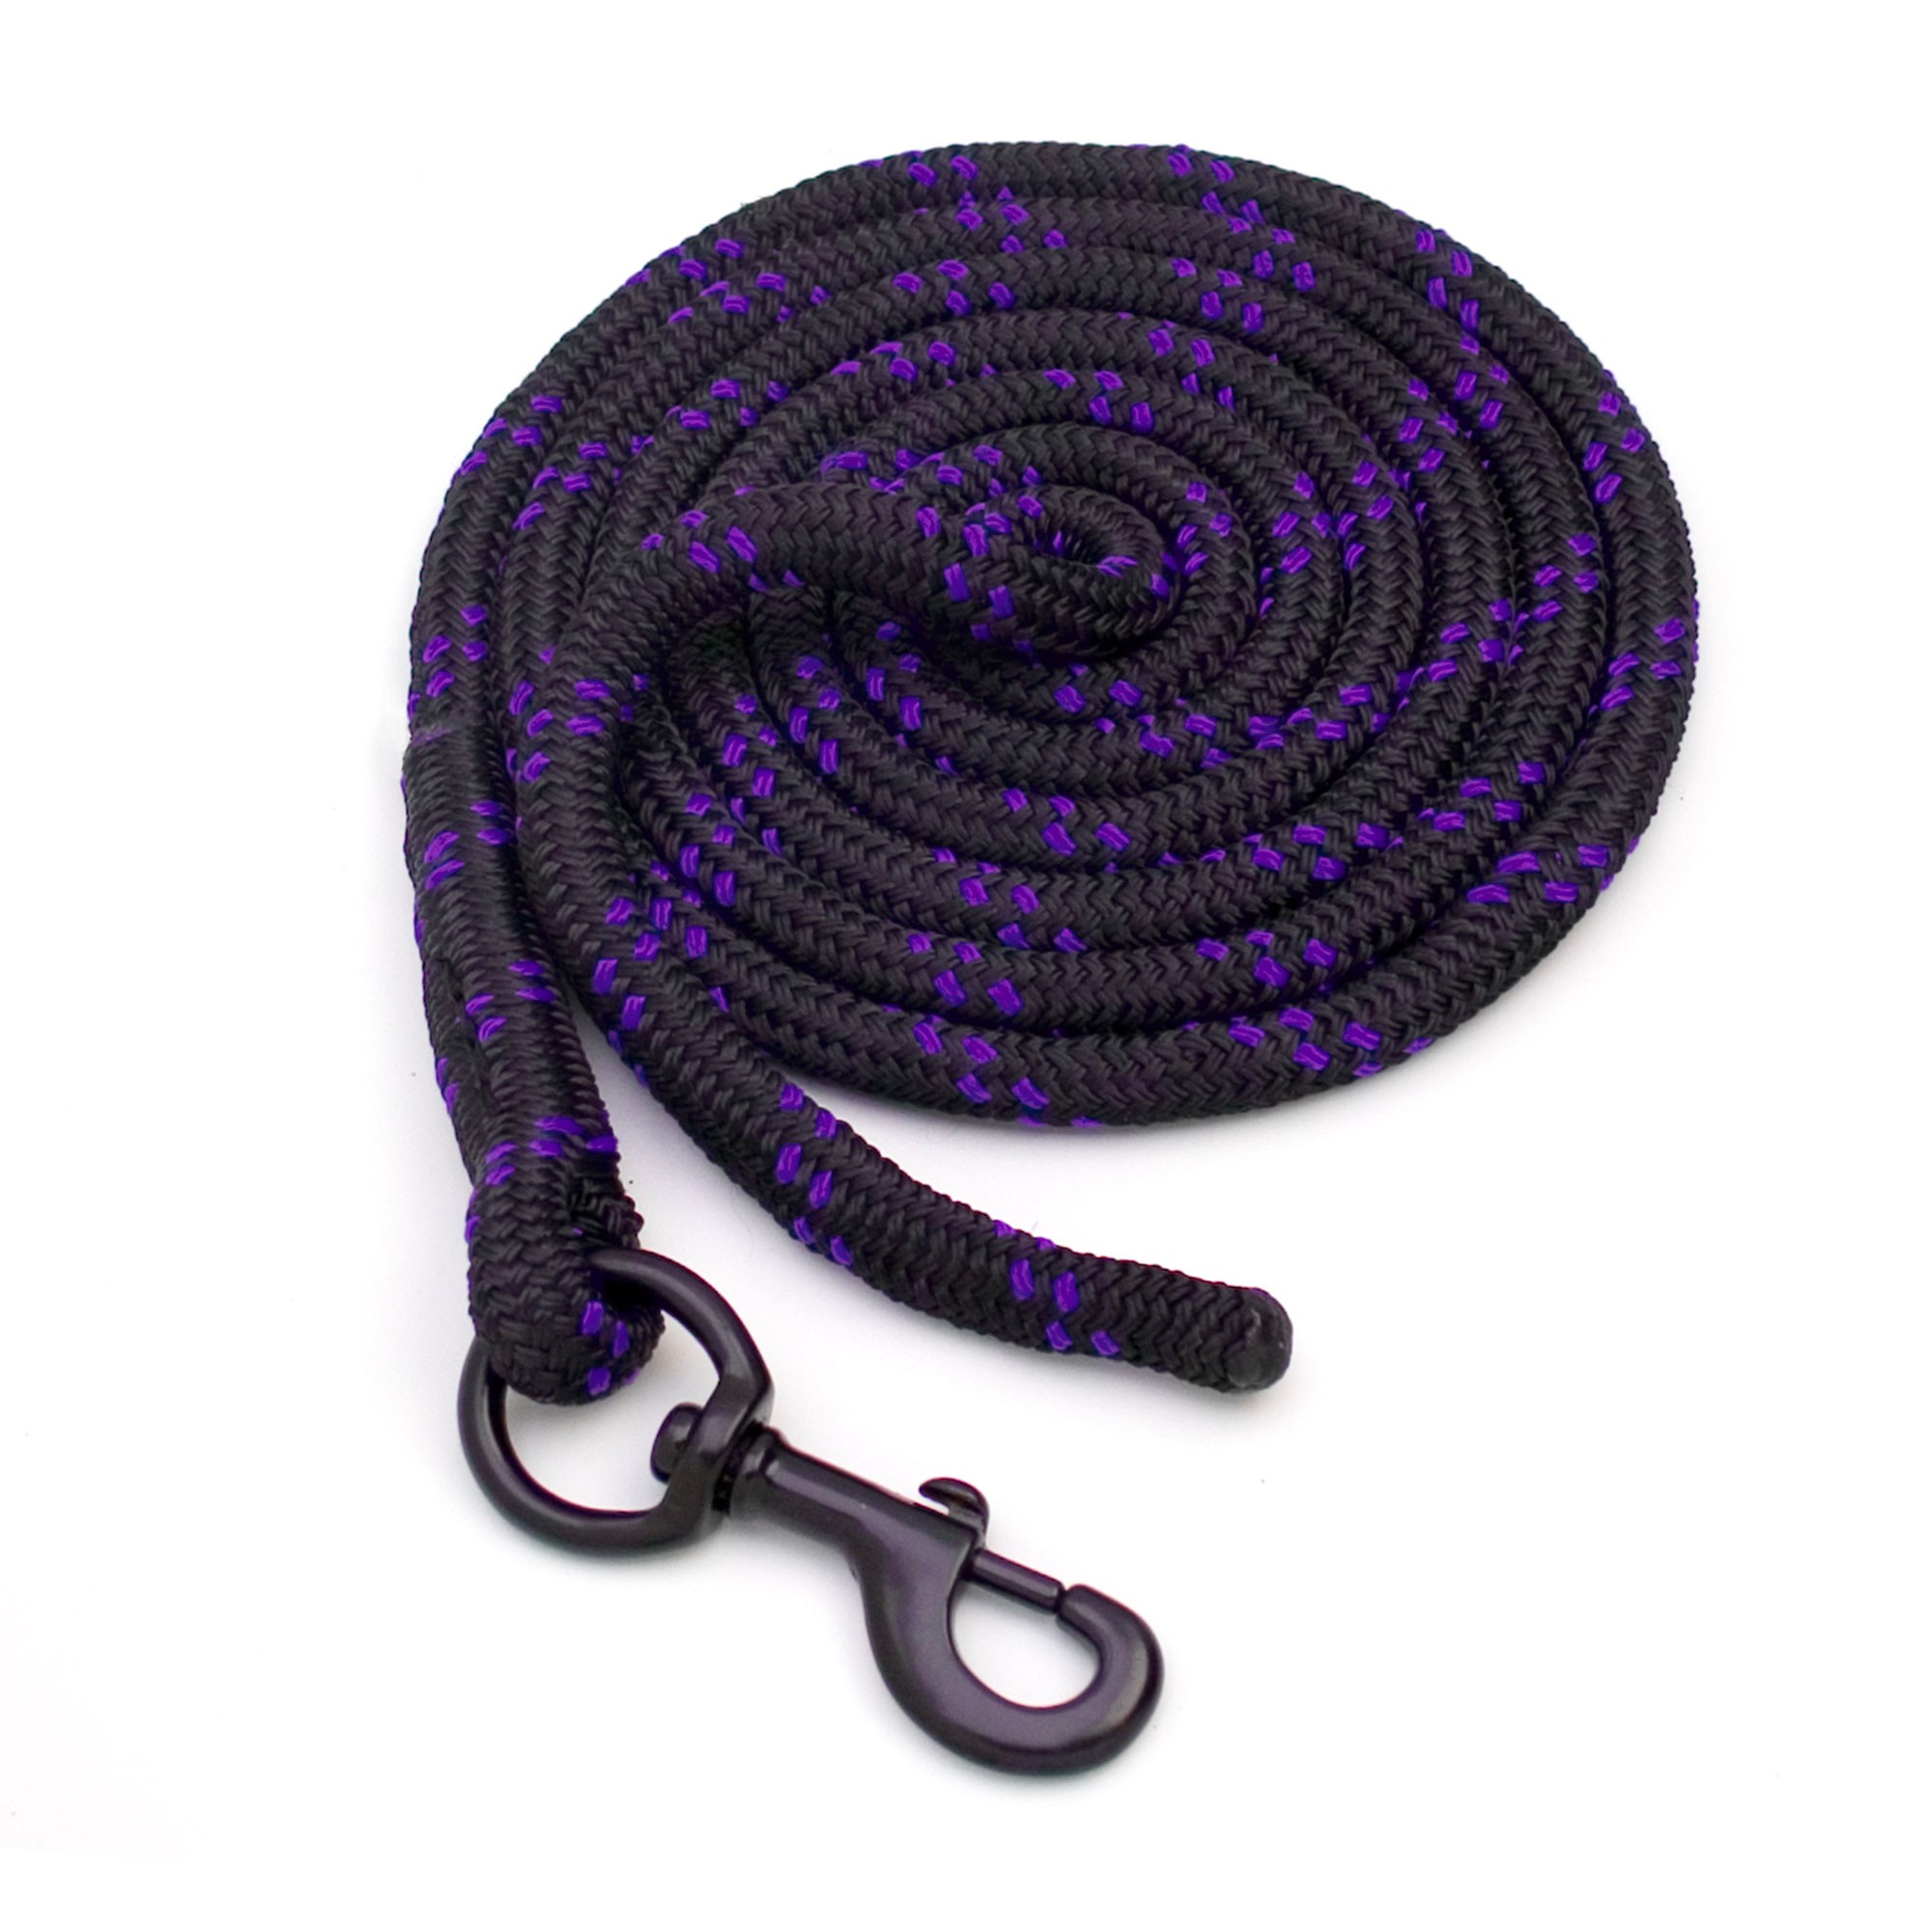 Blocker Lead Rope, black-purple